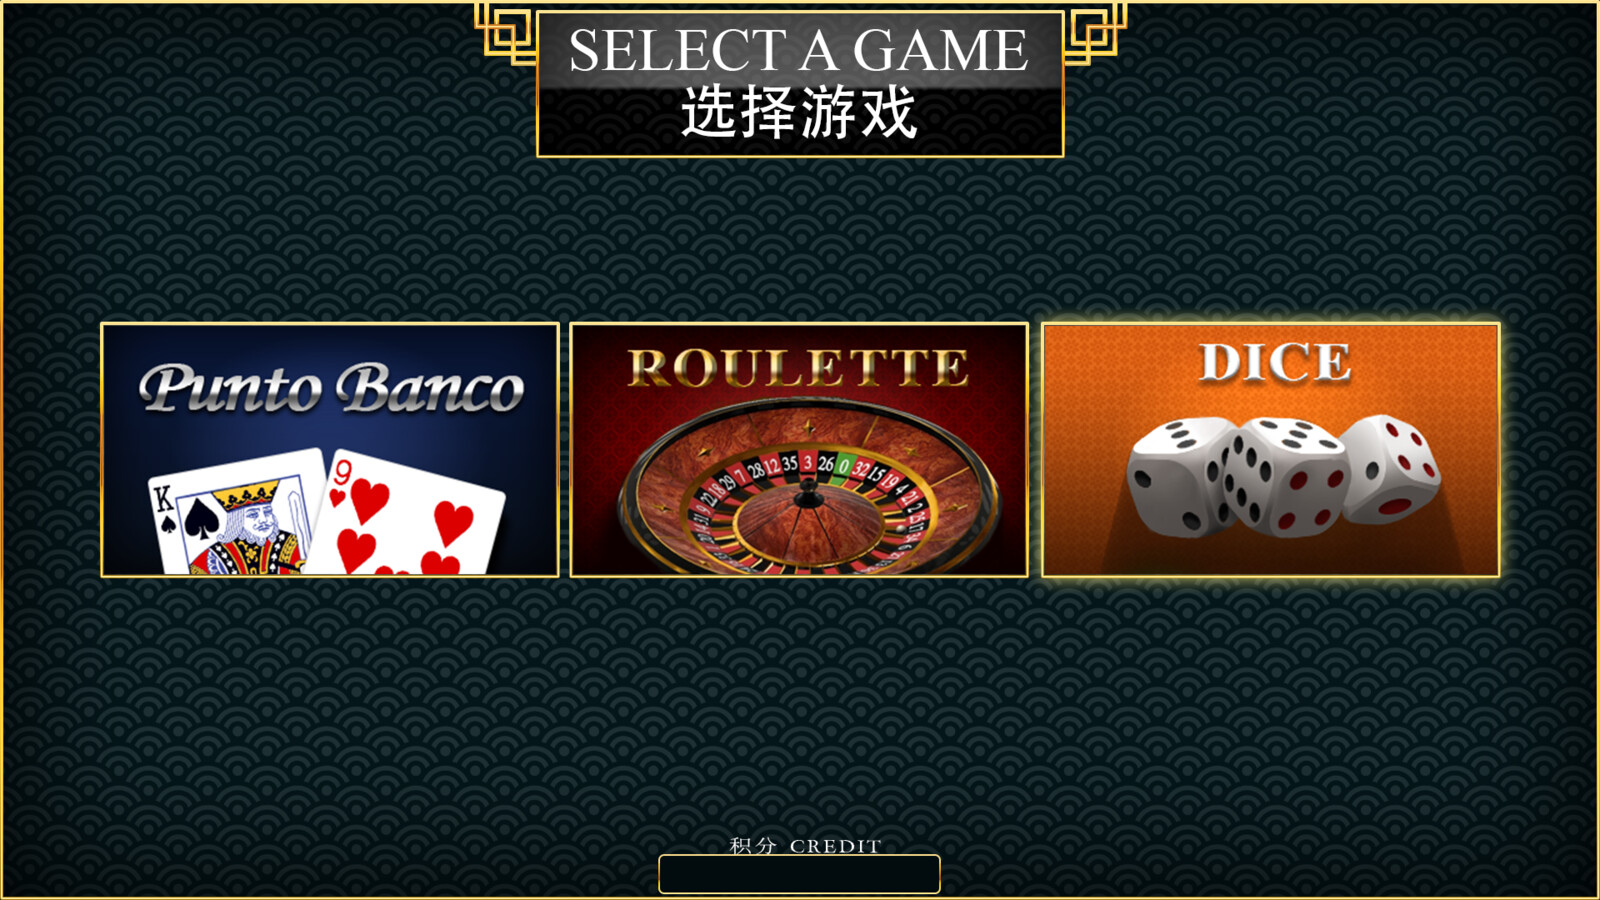 Emperor Suite - game select screen